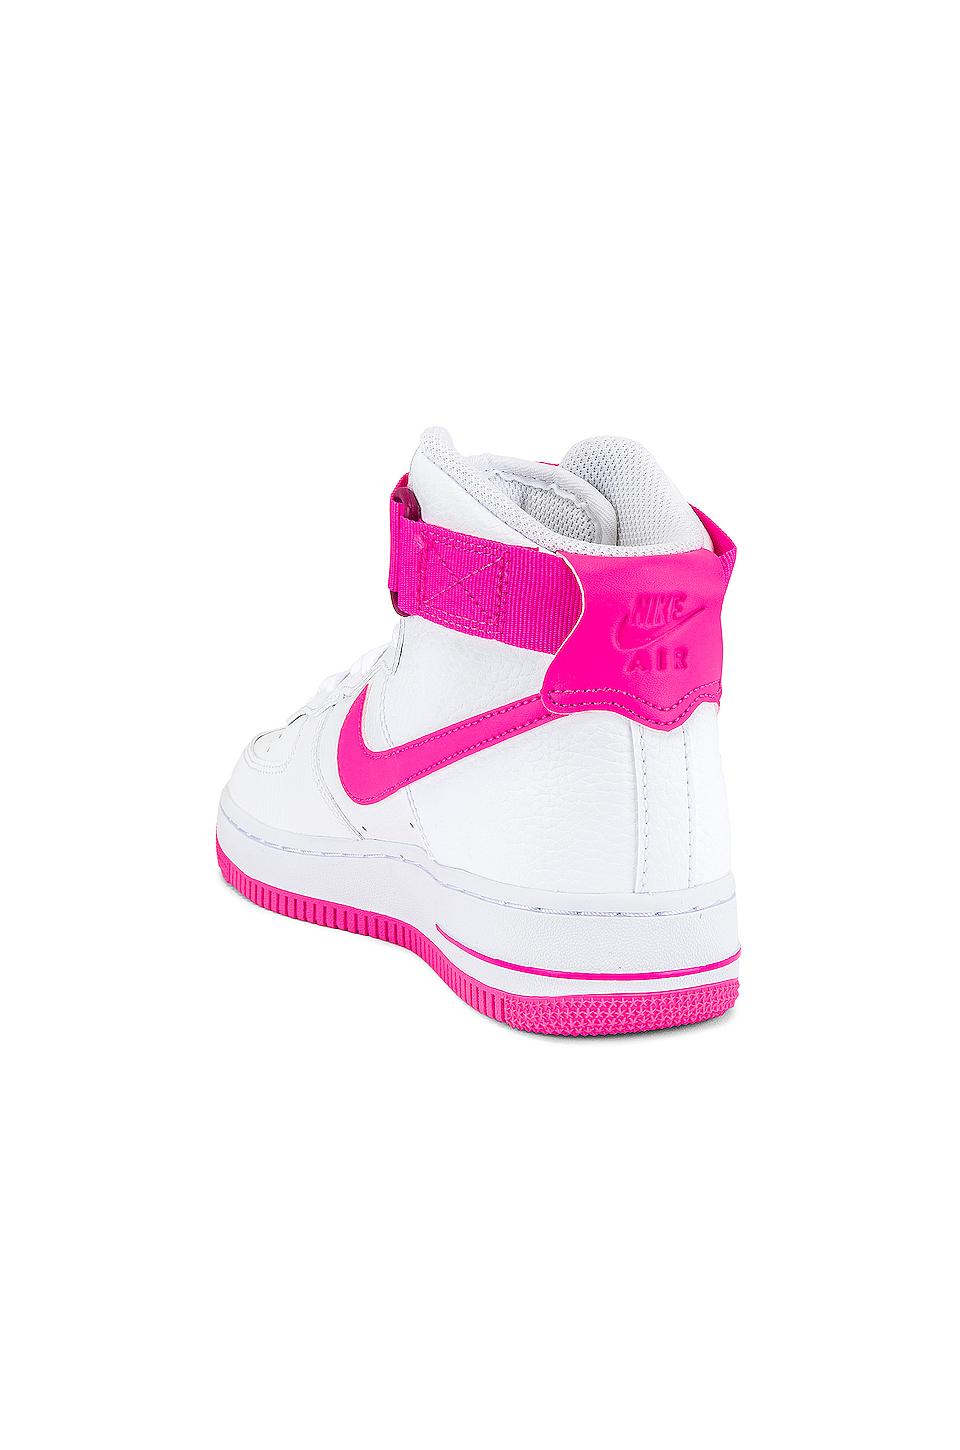 Nike Women's Air Force 1 Hi Sneaker in Pink